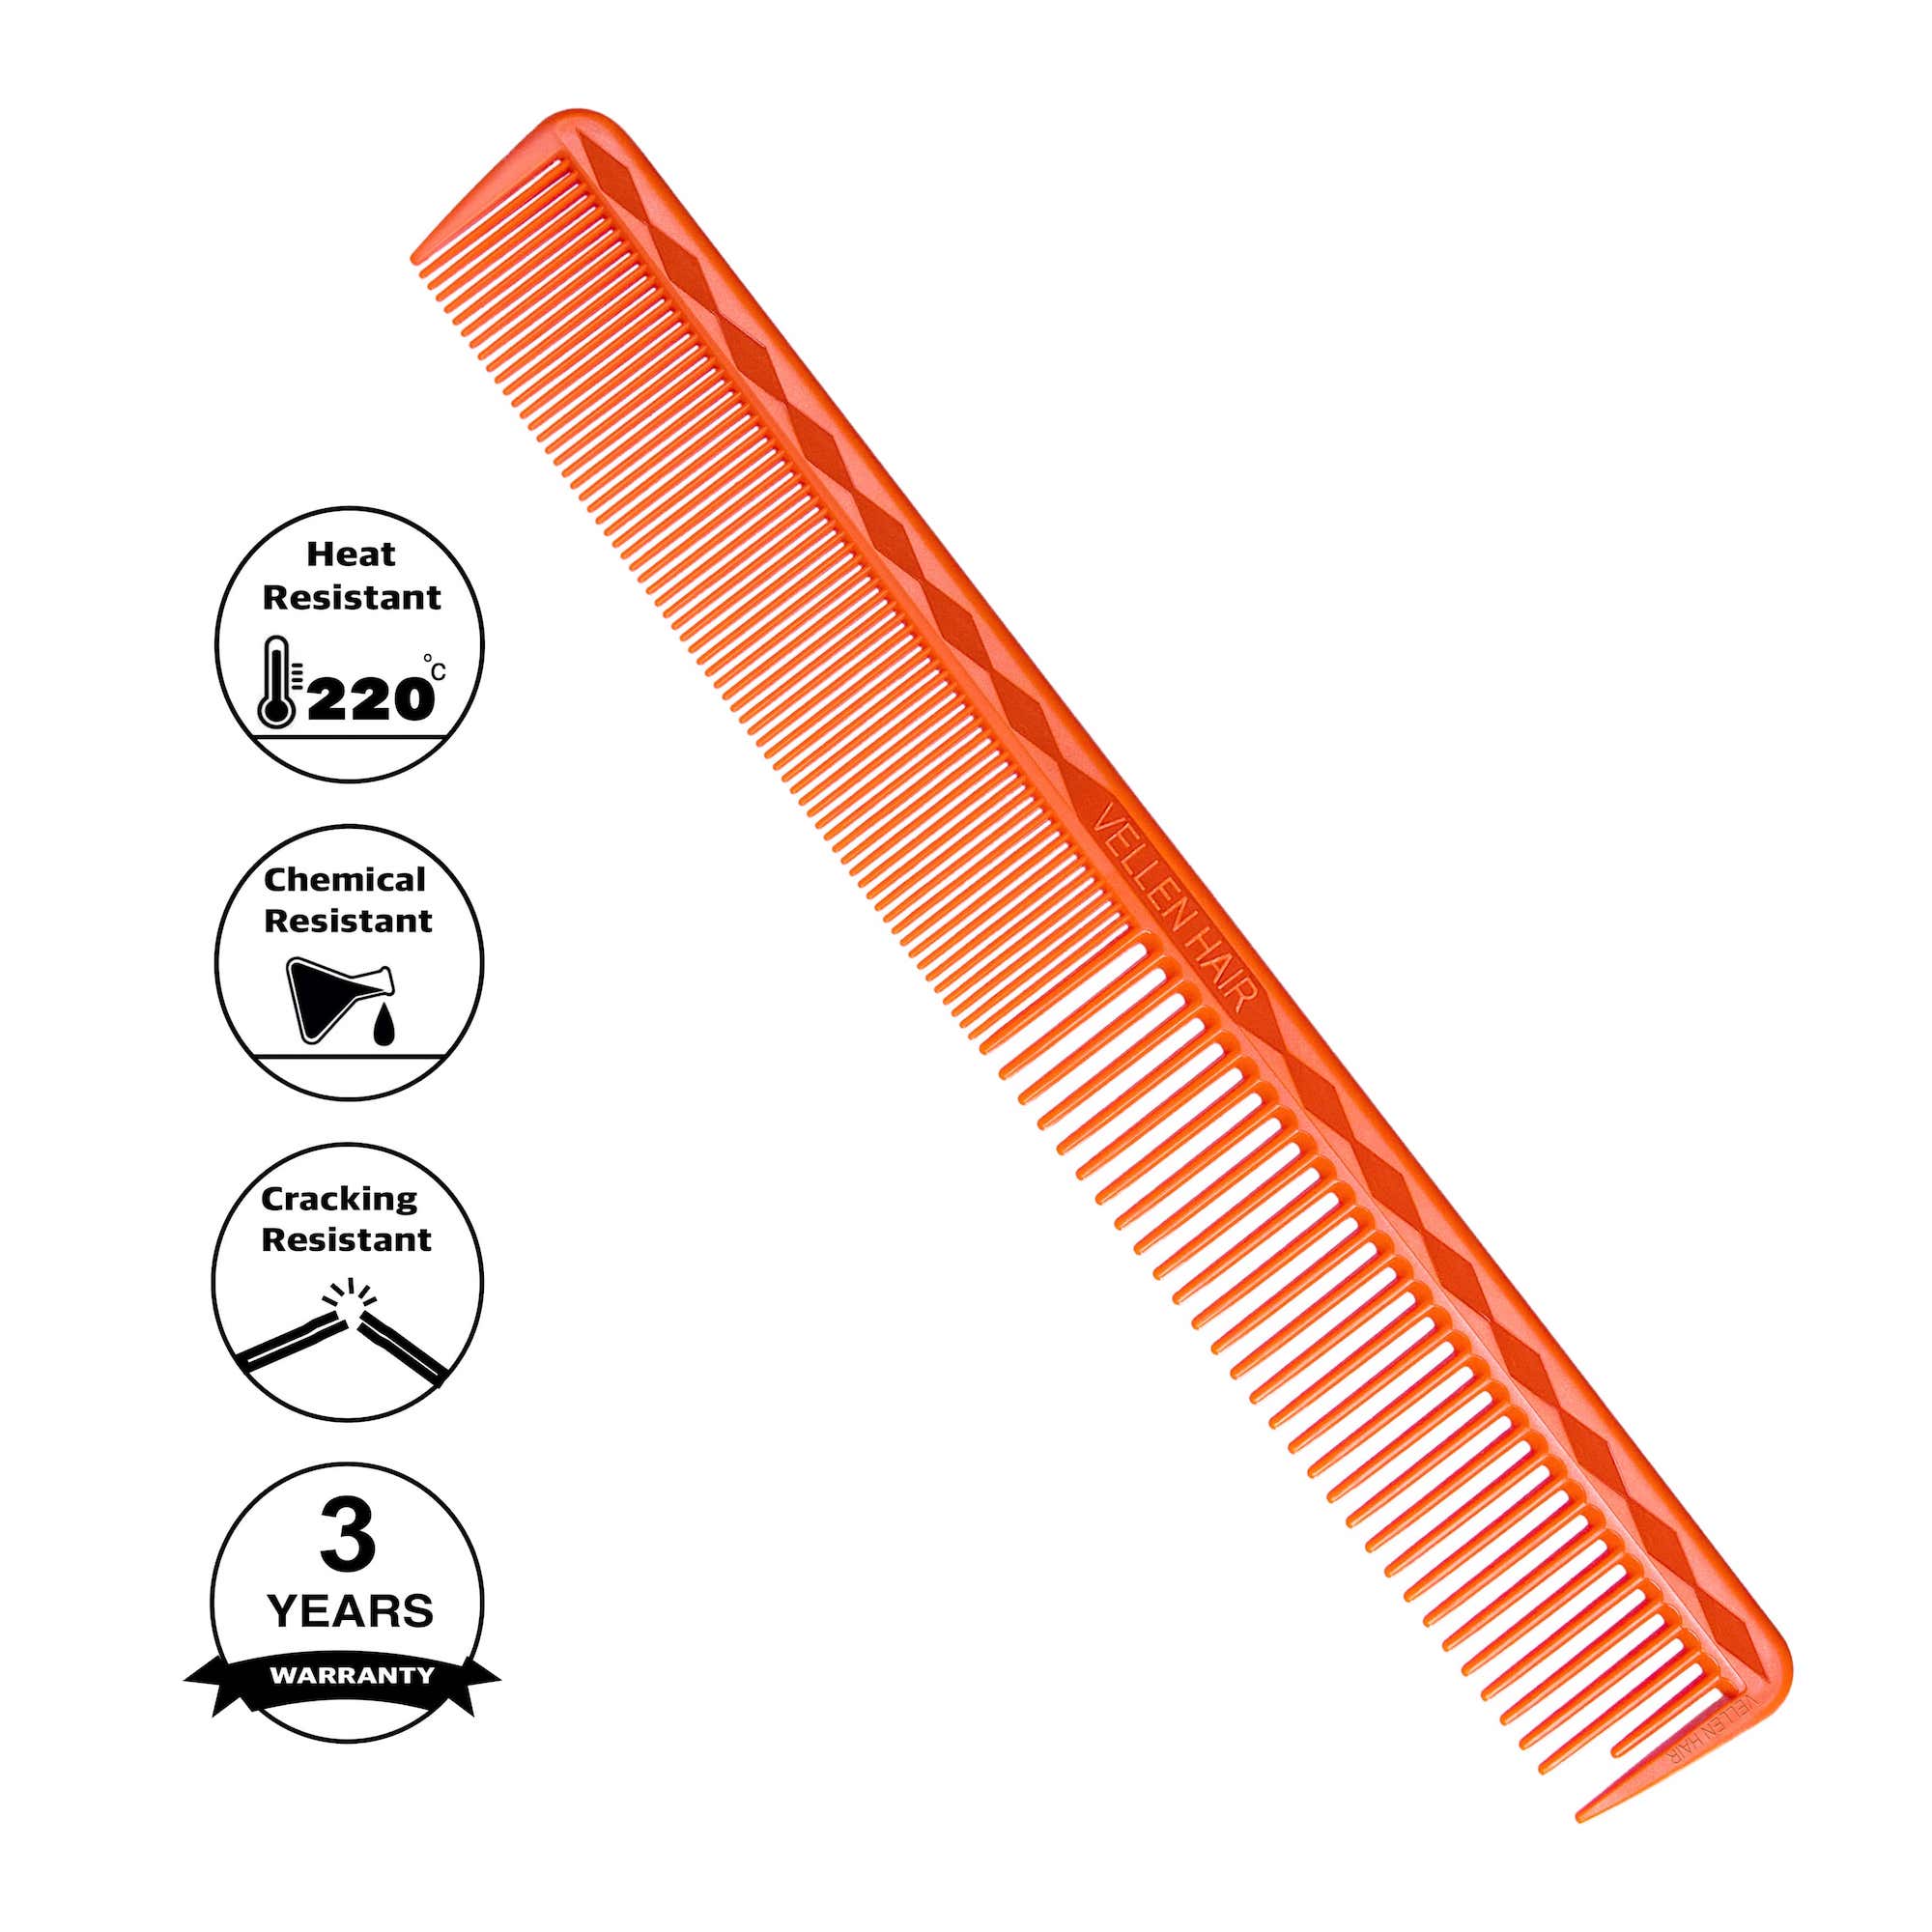 Vellen Hair® Ultimate Cutting Comb - VH202 - 17.8 cm / 7 inch - Orange